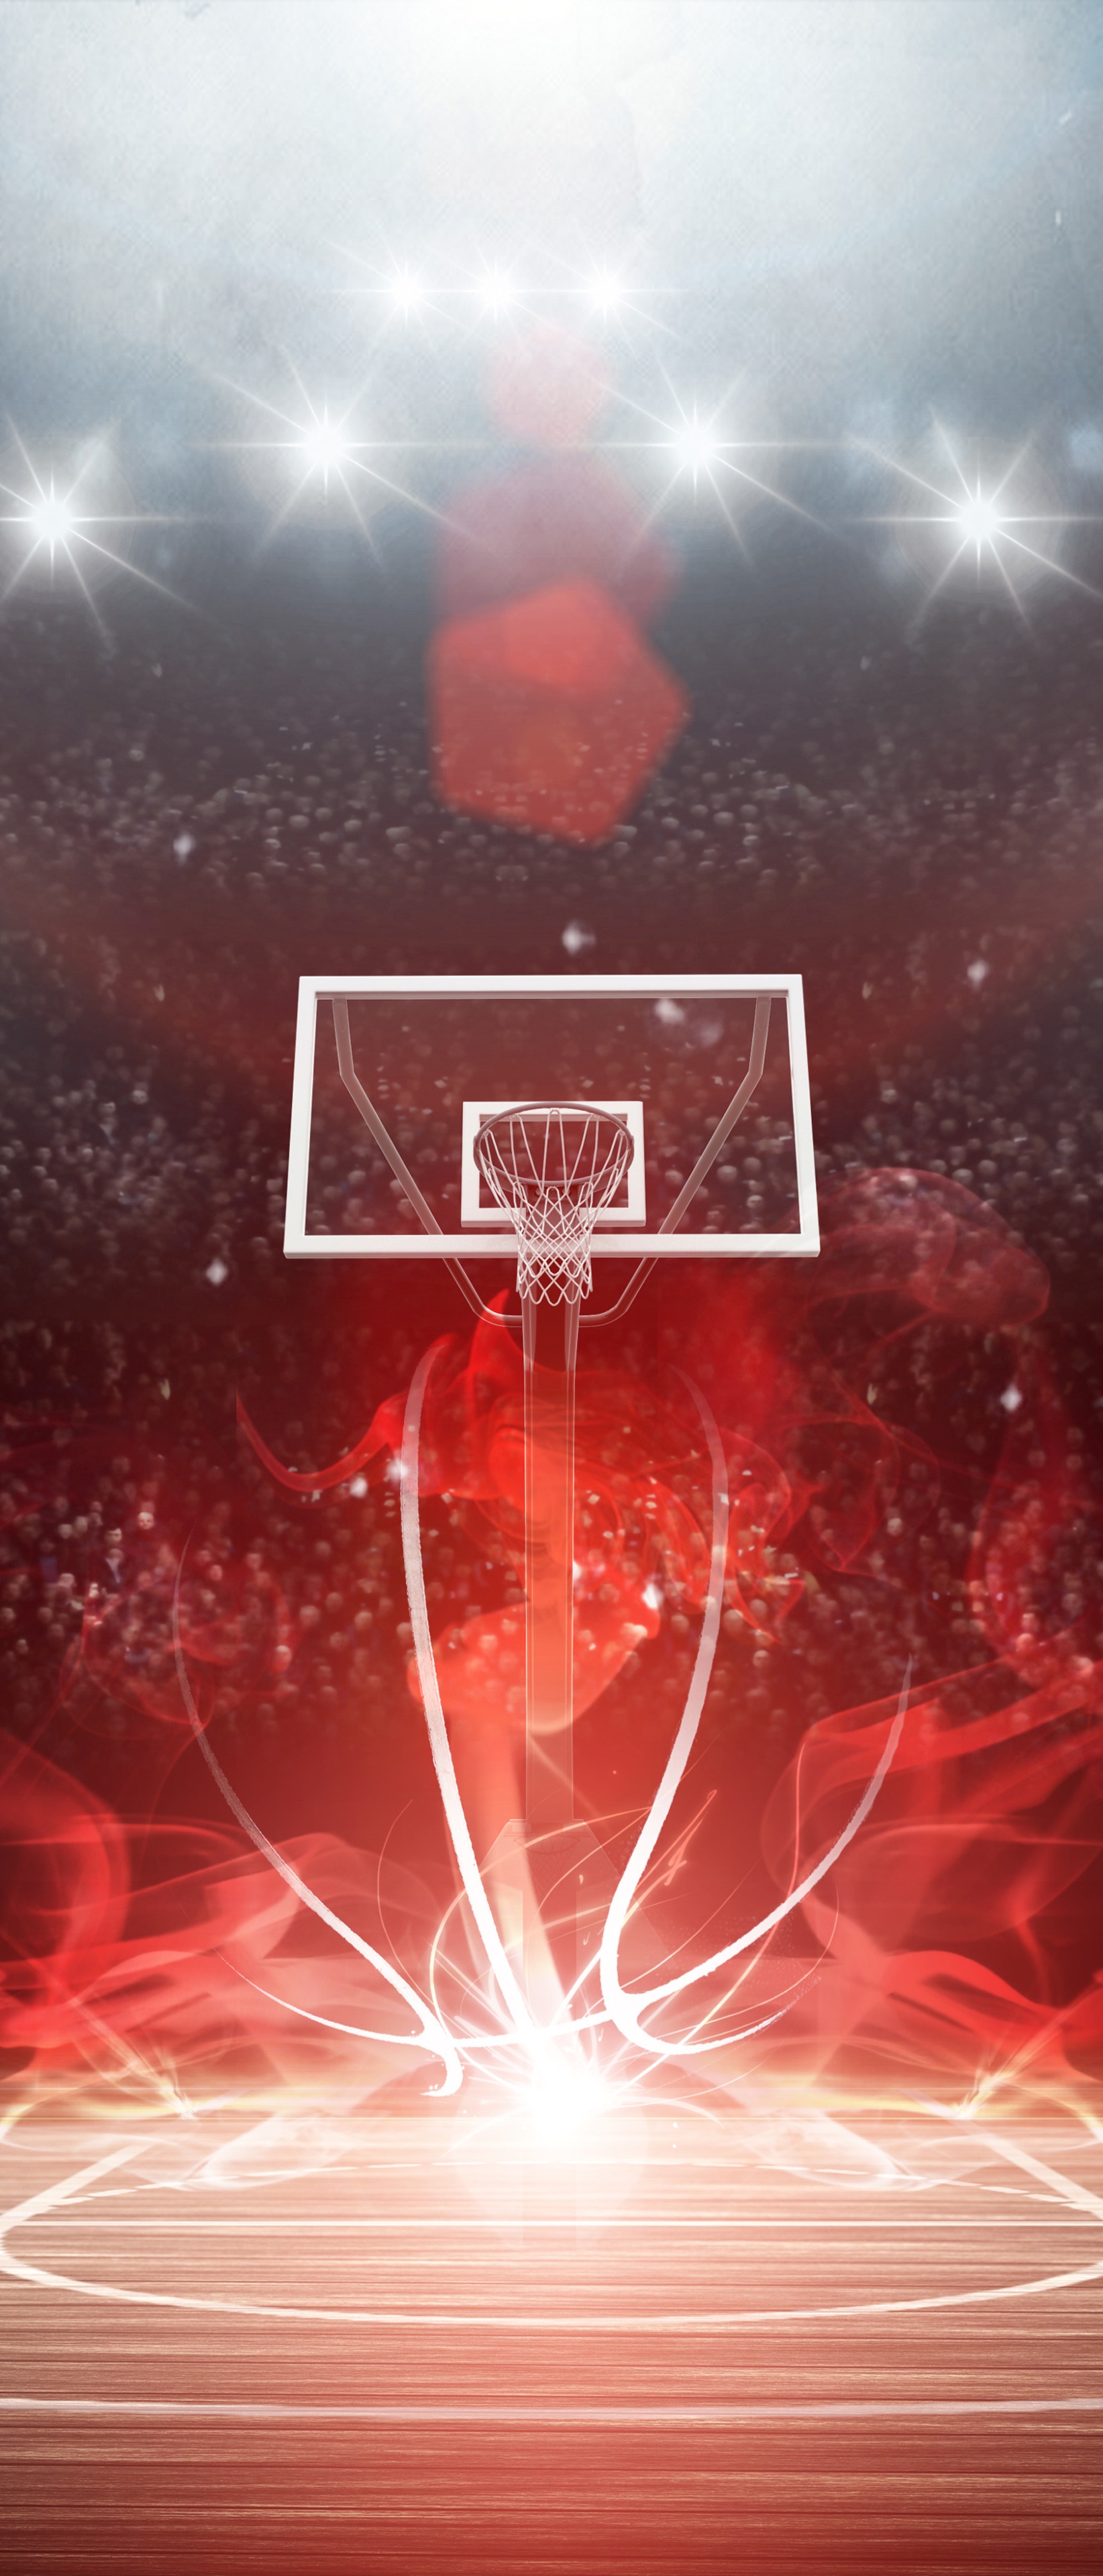 Basketball phone wallpaper 1080P, 2k, 4k Full HD Wallpaper, Background Free Download